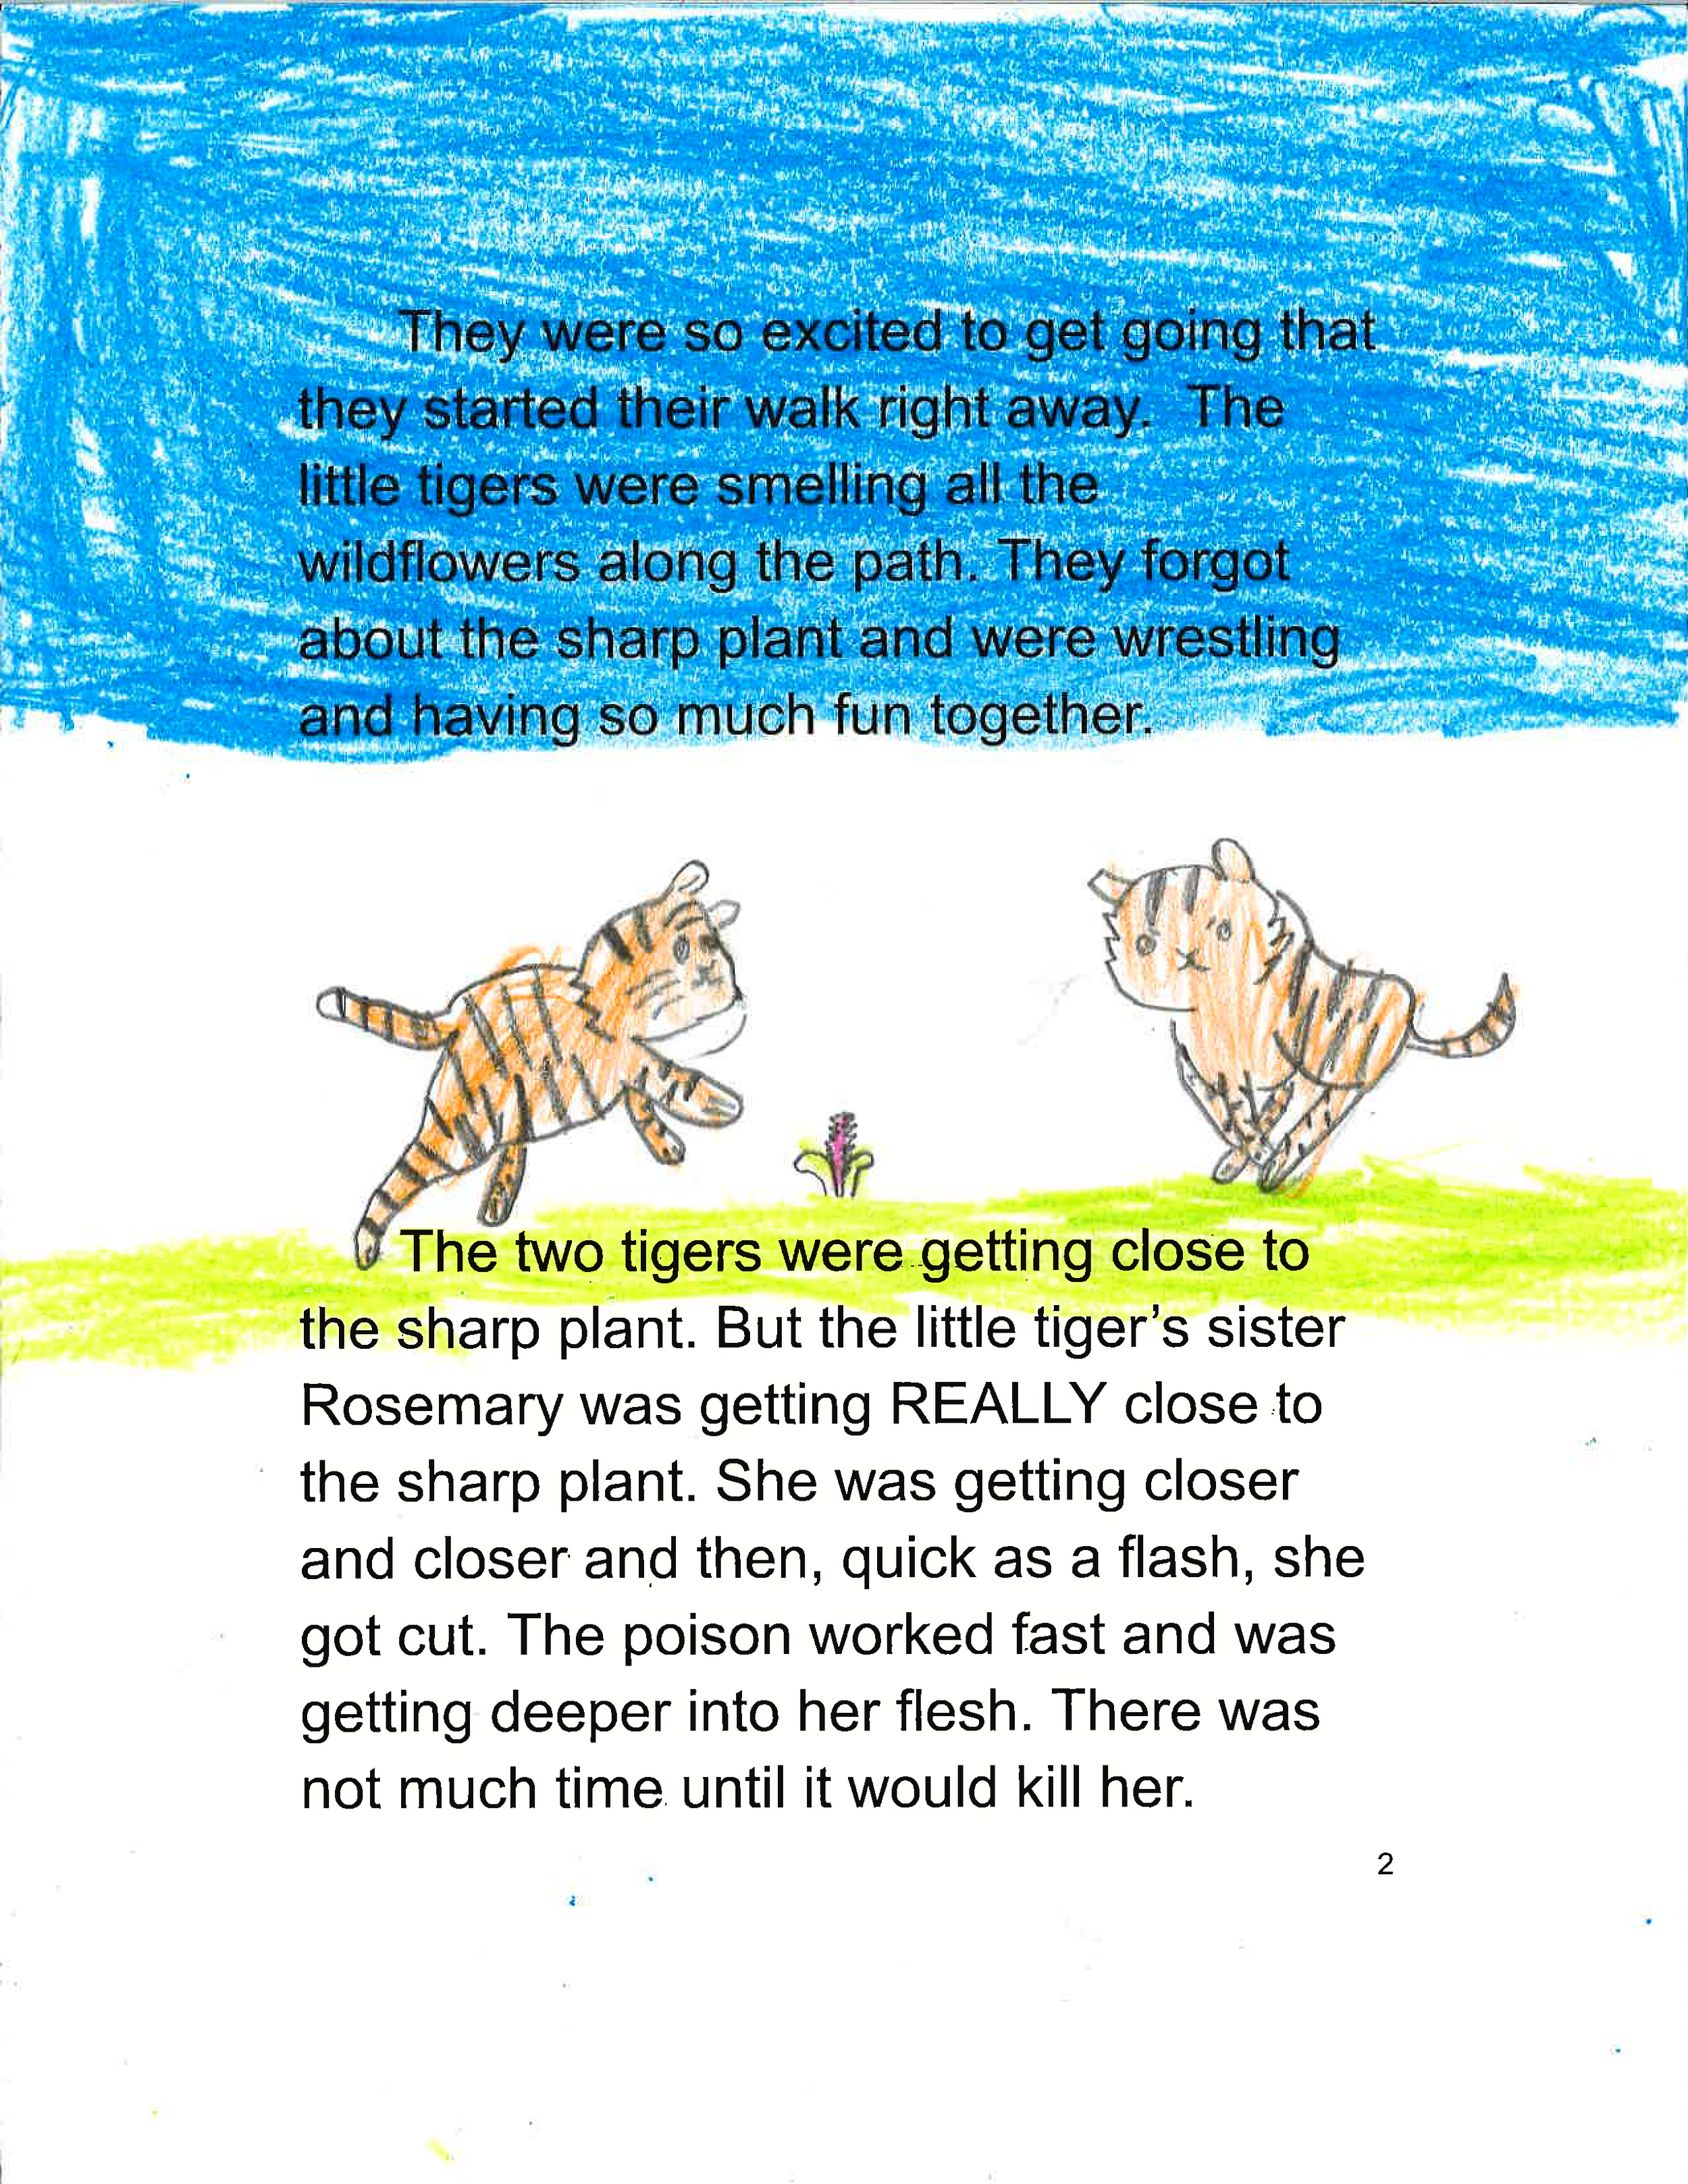 Illustration from "The Brave Tiger"